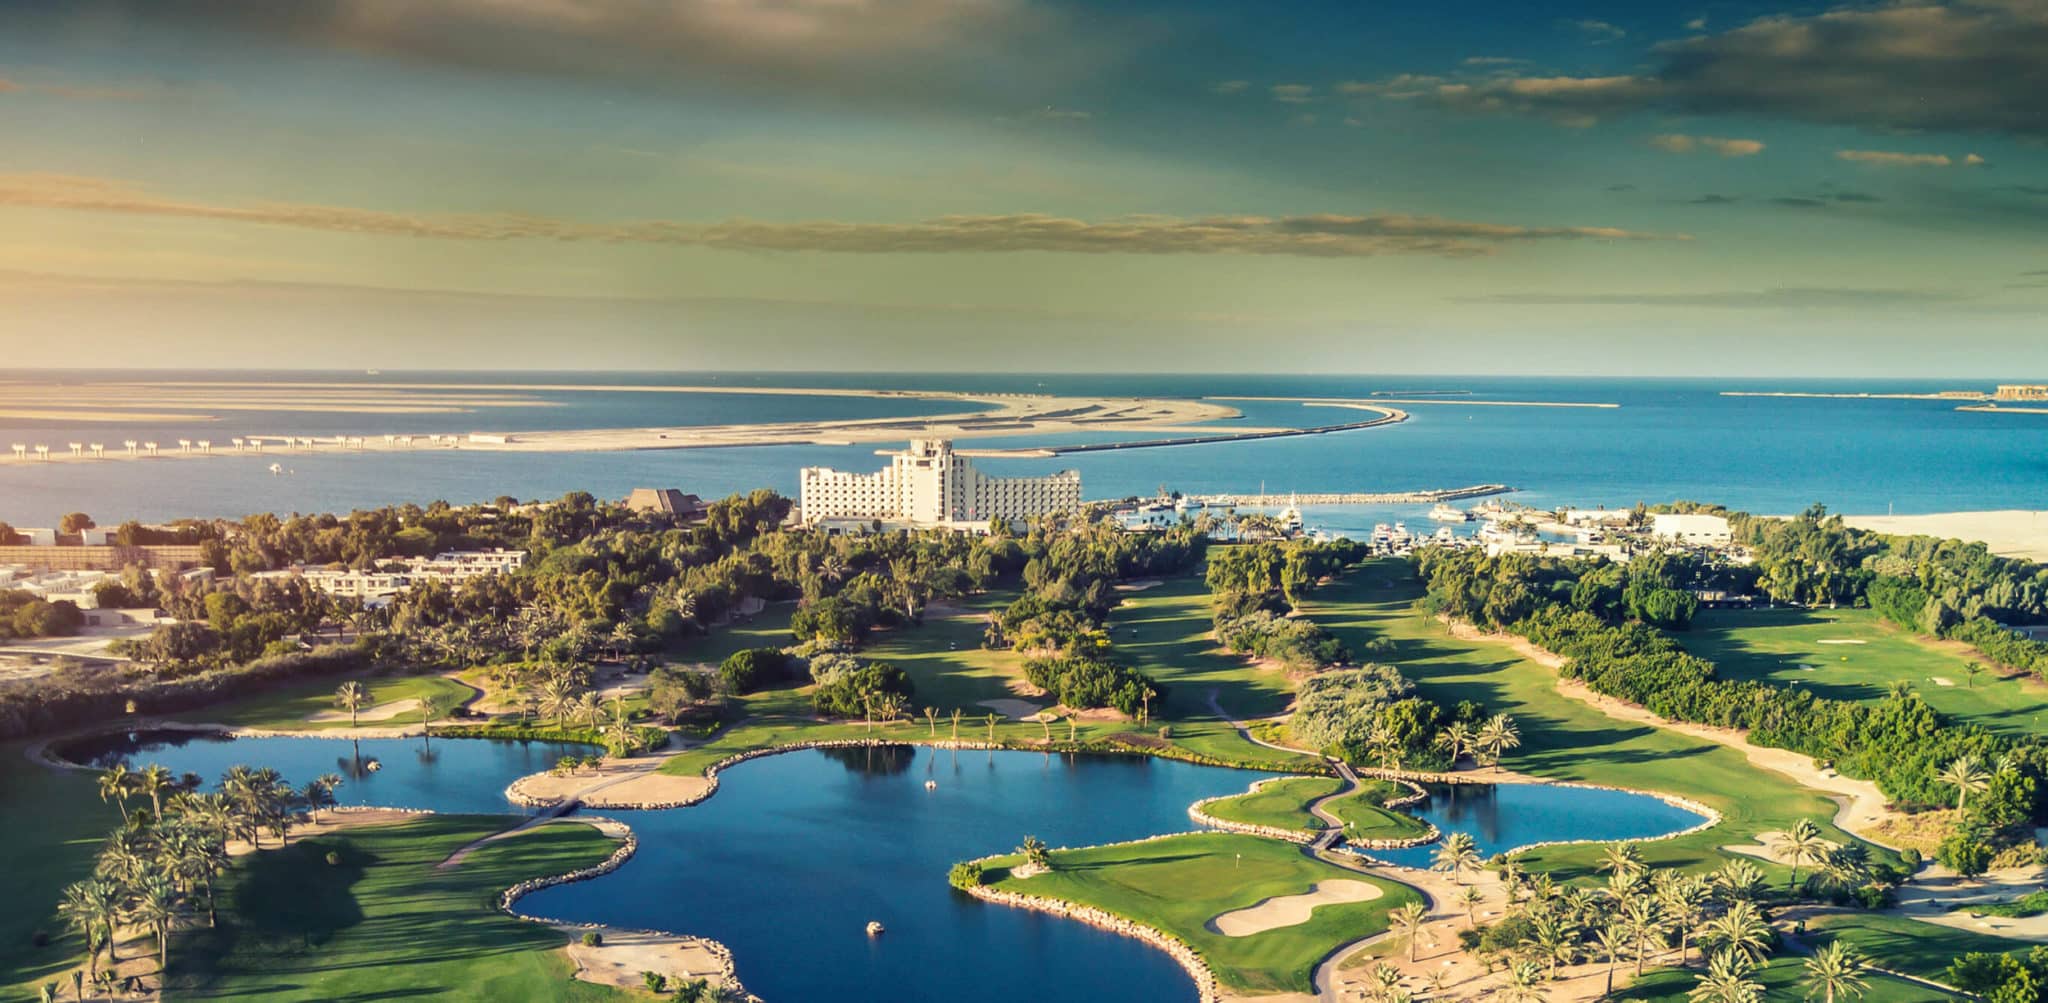 Jebel Ali Golf Resort - Nehru Memorial